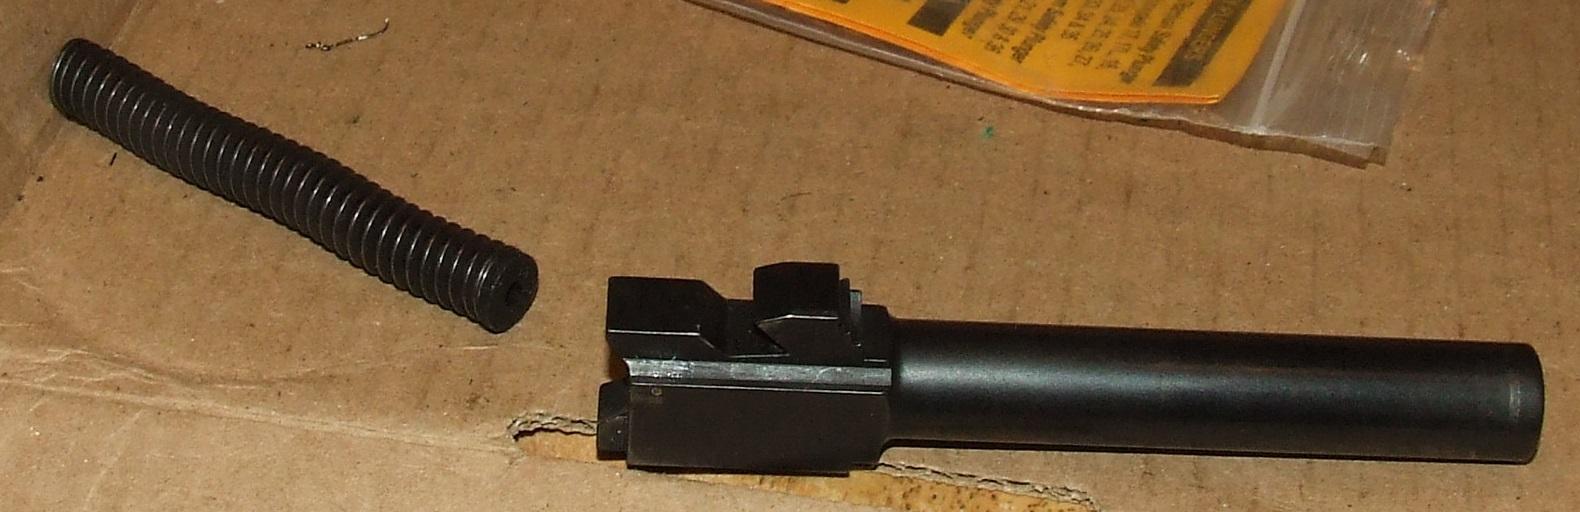 Glock Factory Model 17 9mm Barrel